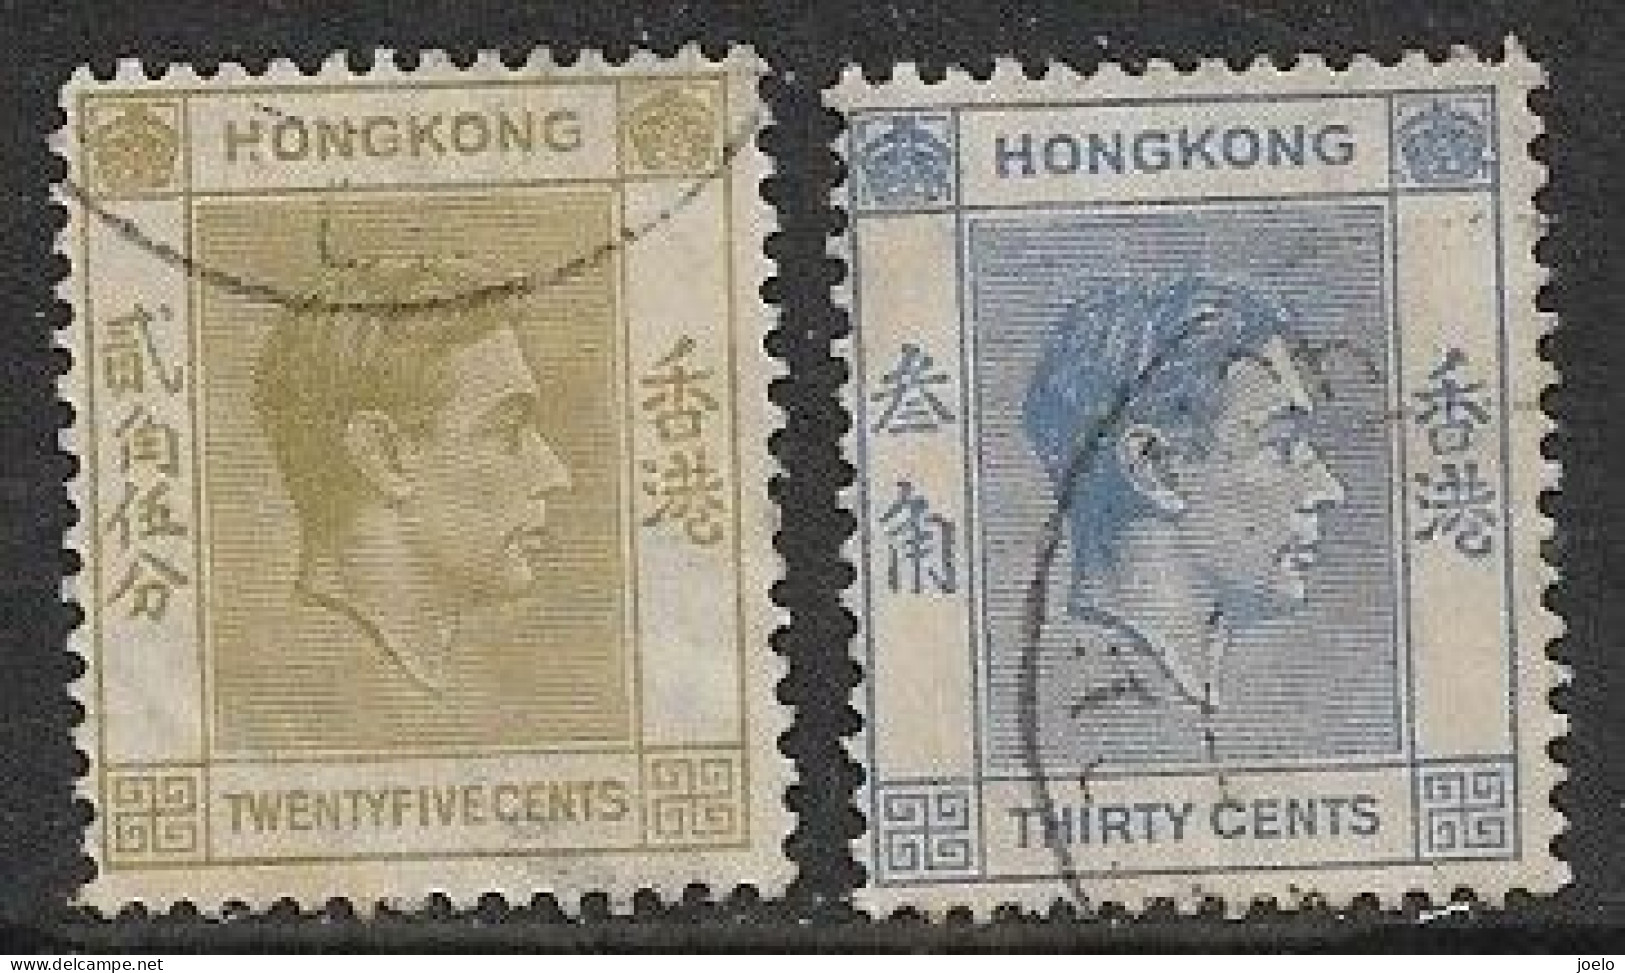 HONG KONG KGVl 1938 DEFINITIVES 25c OLIVE & 30c BLUE PAIR - Usados